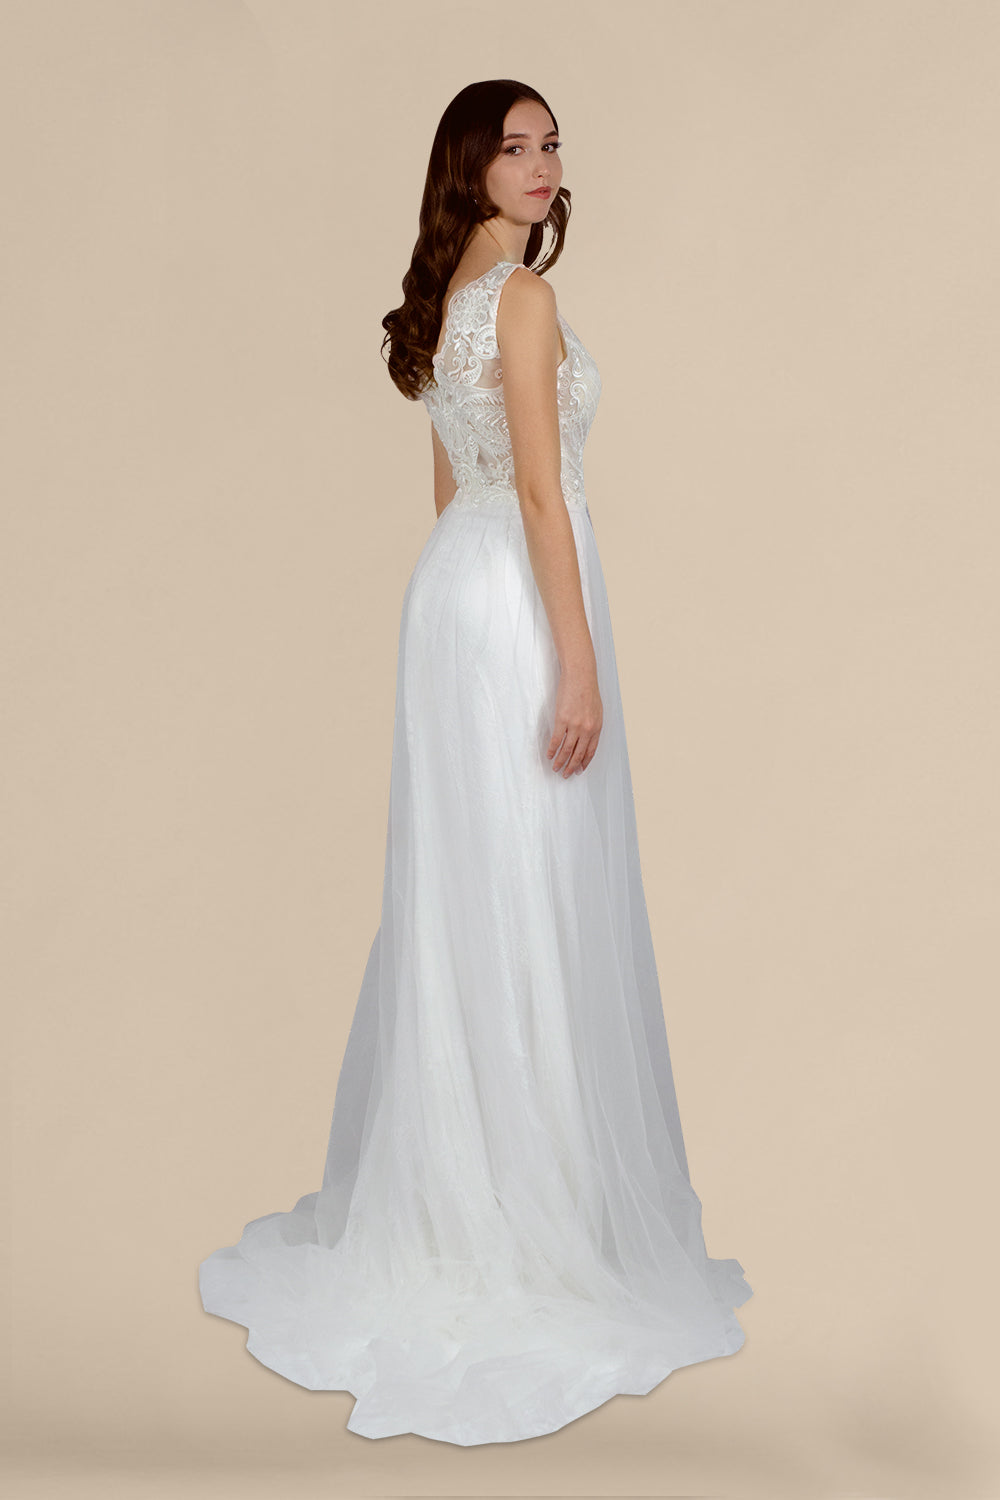 bohemian A line tulle wedding dresses perth australia custom dressmaker envious bridal & formal